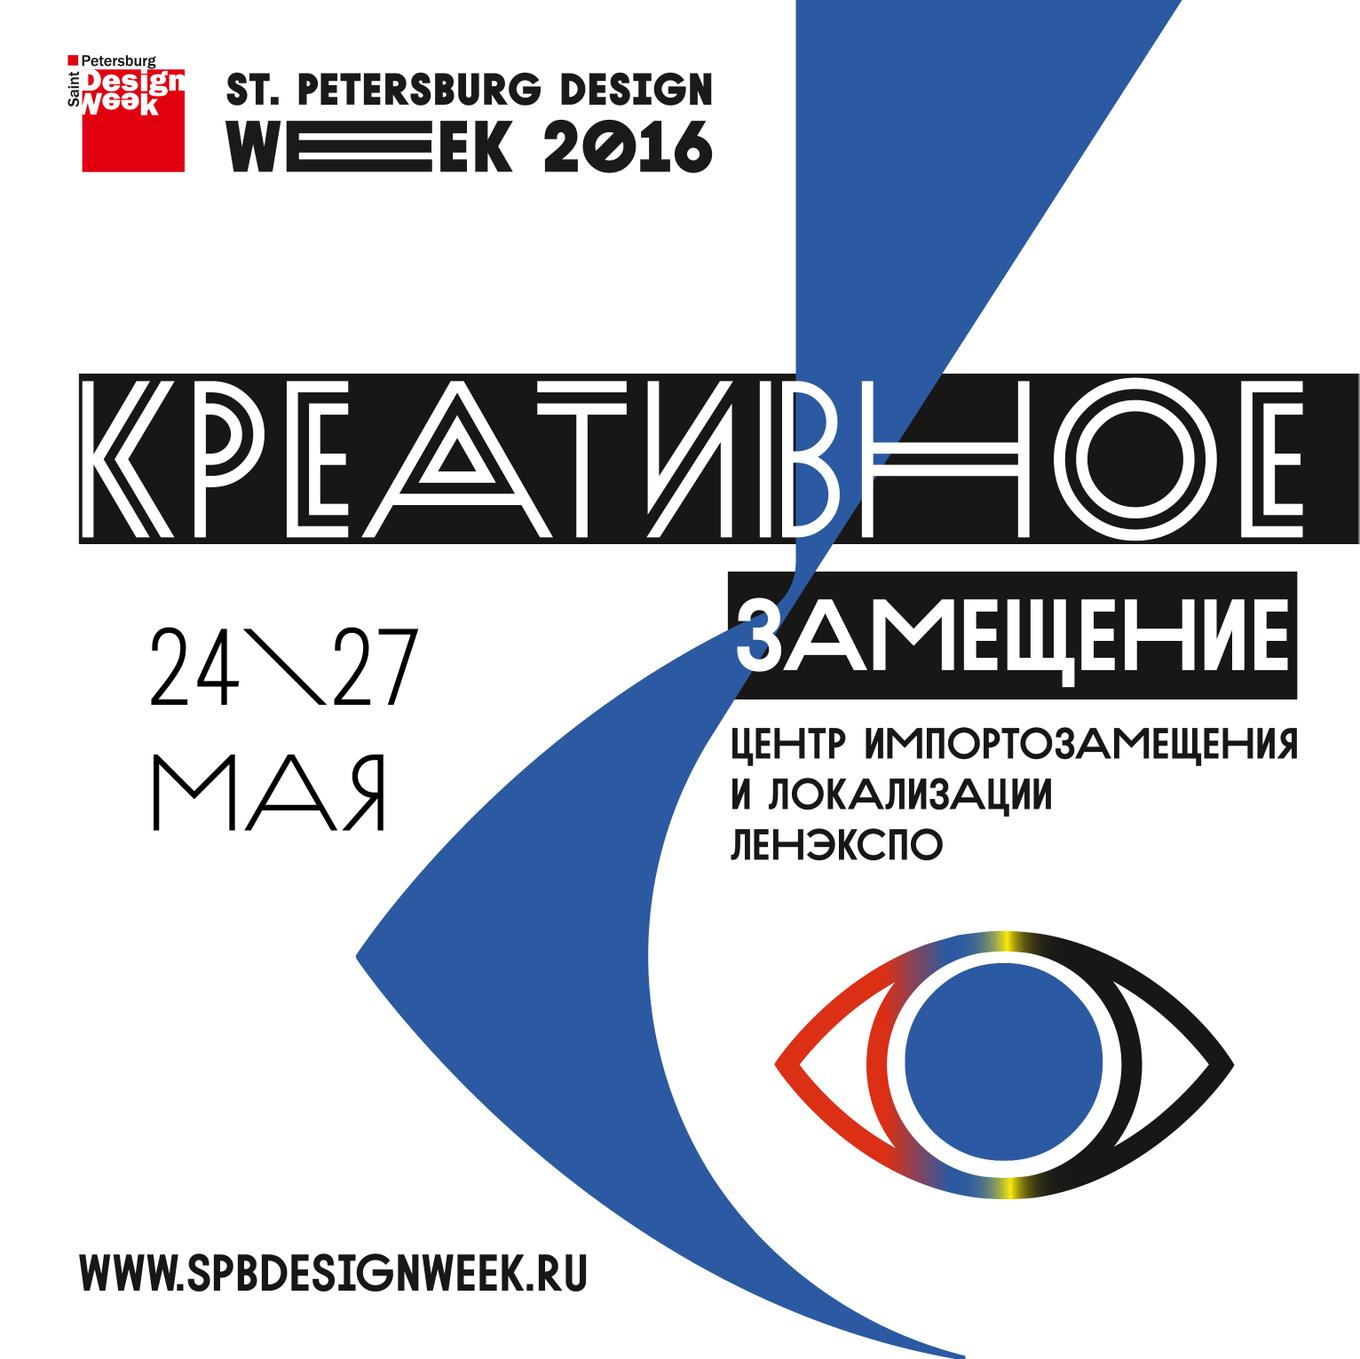 St. Petersburg Design Week — Неделя Дизайна | ВКонтакте